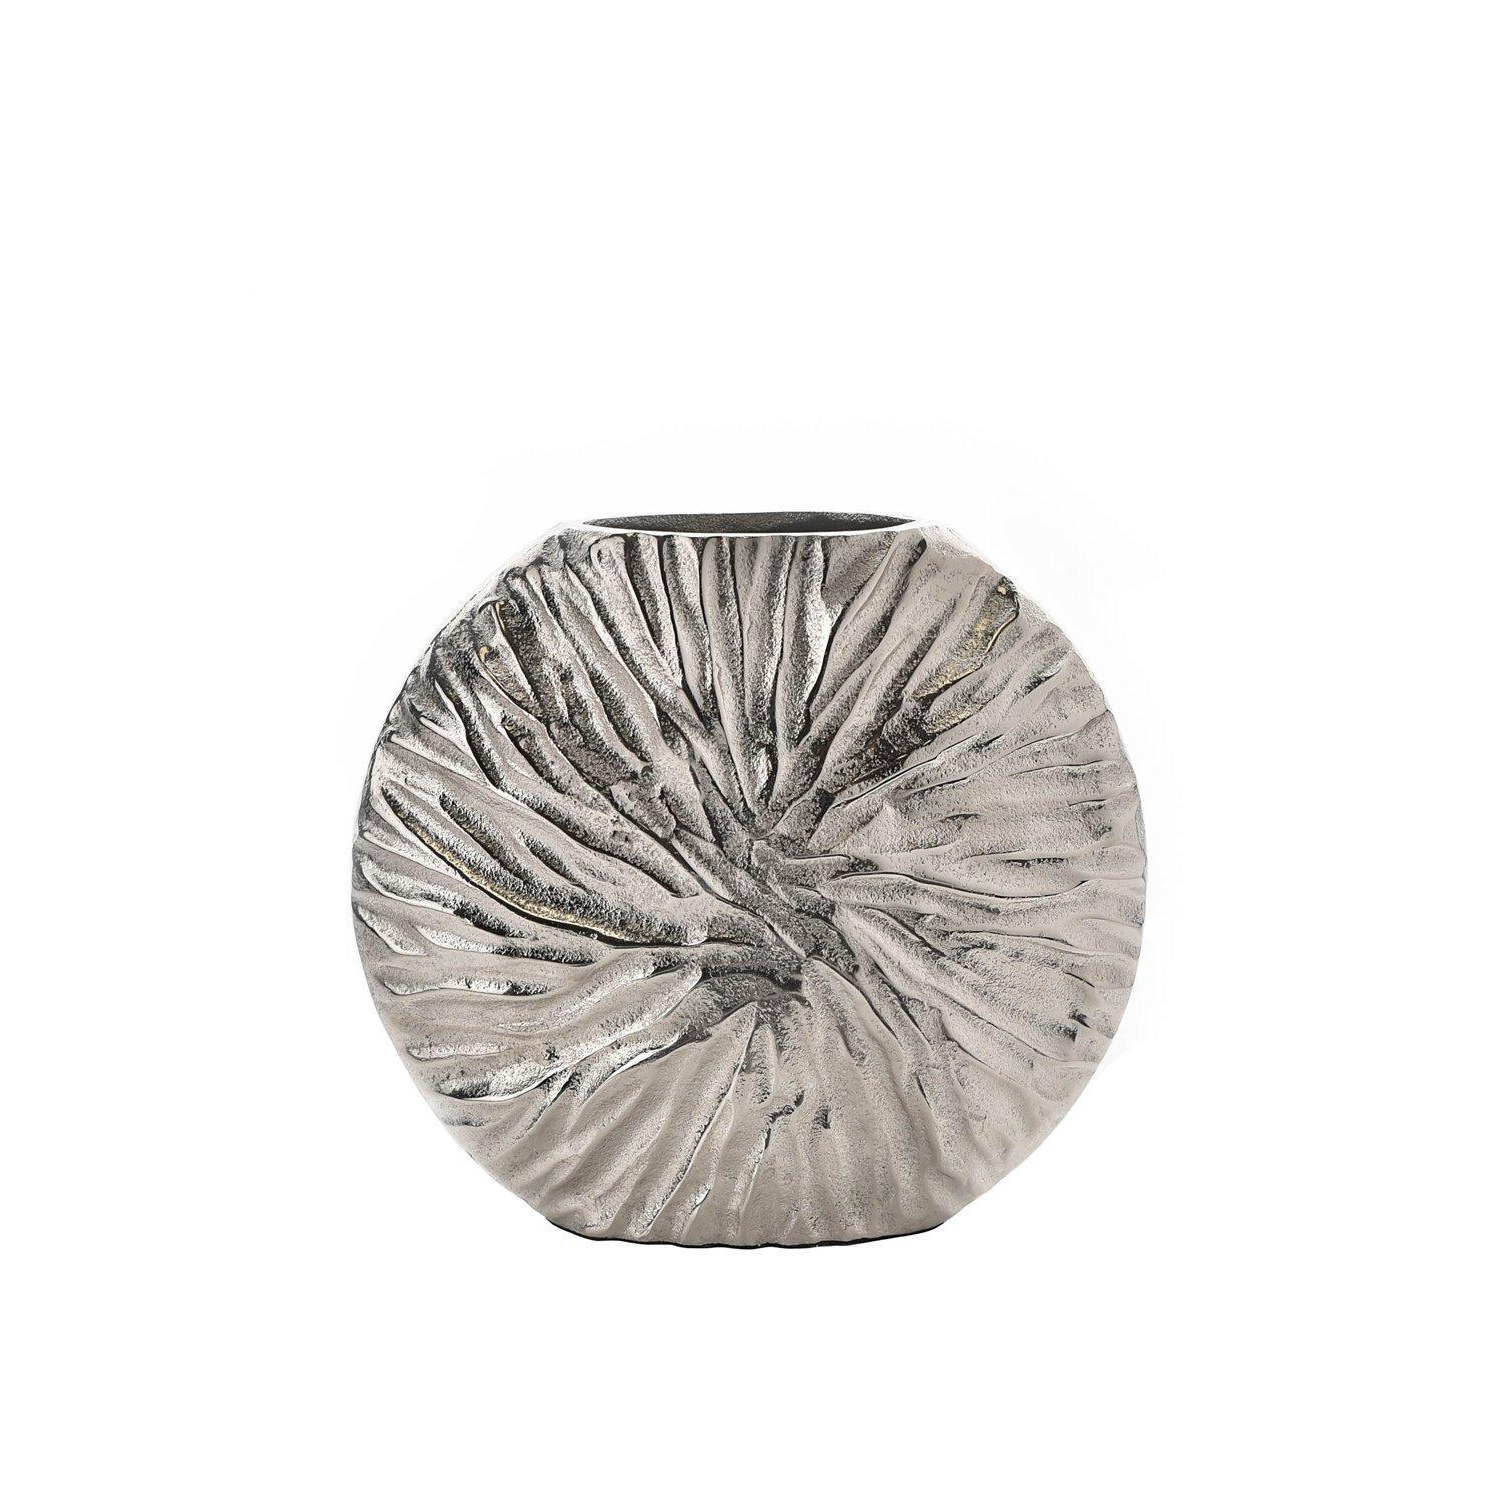 Silver Metal Textured Round Vase 21x24cm - image 1